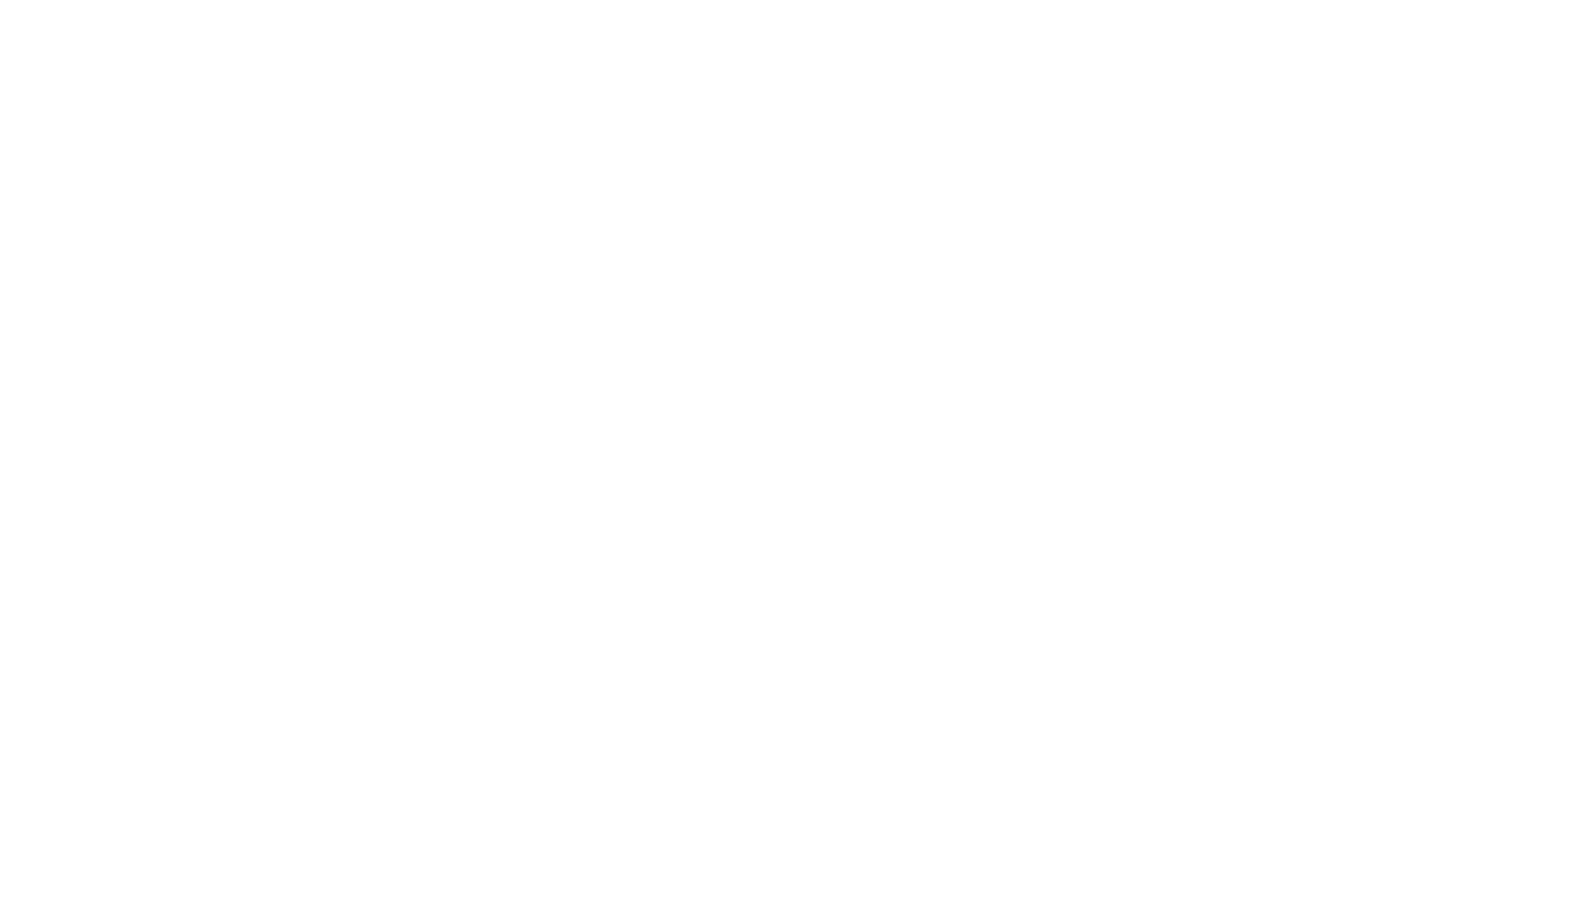 Oramed Pharmaceuticals logo large for dark backgrounds (transparent PNG)